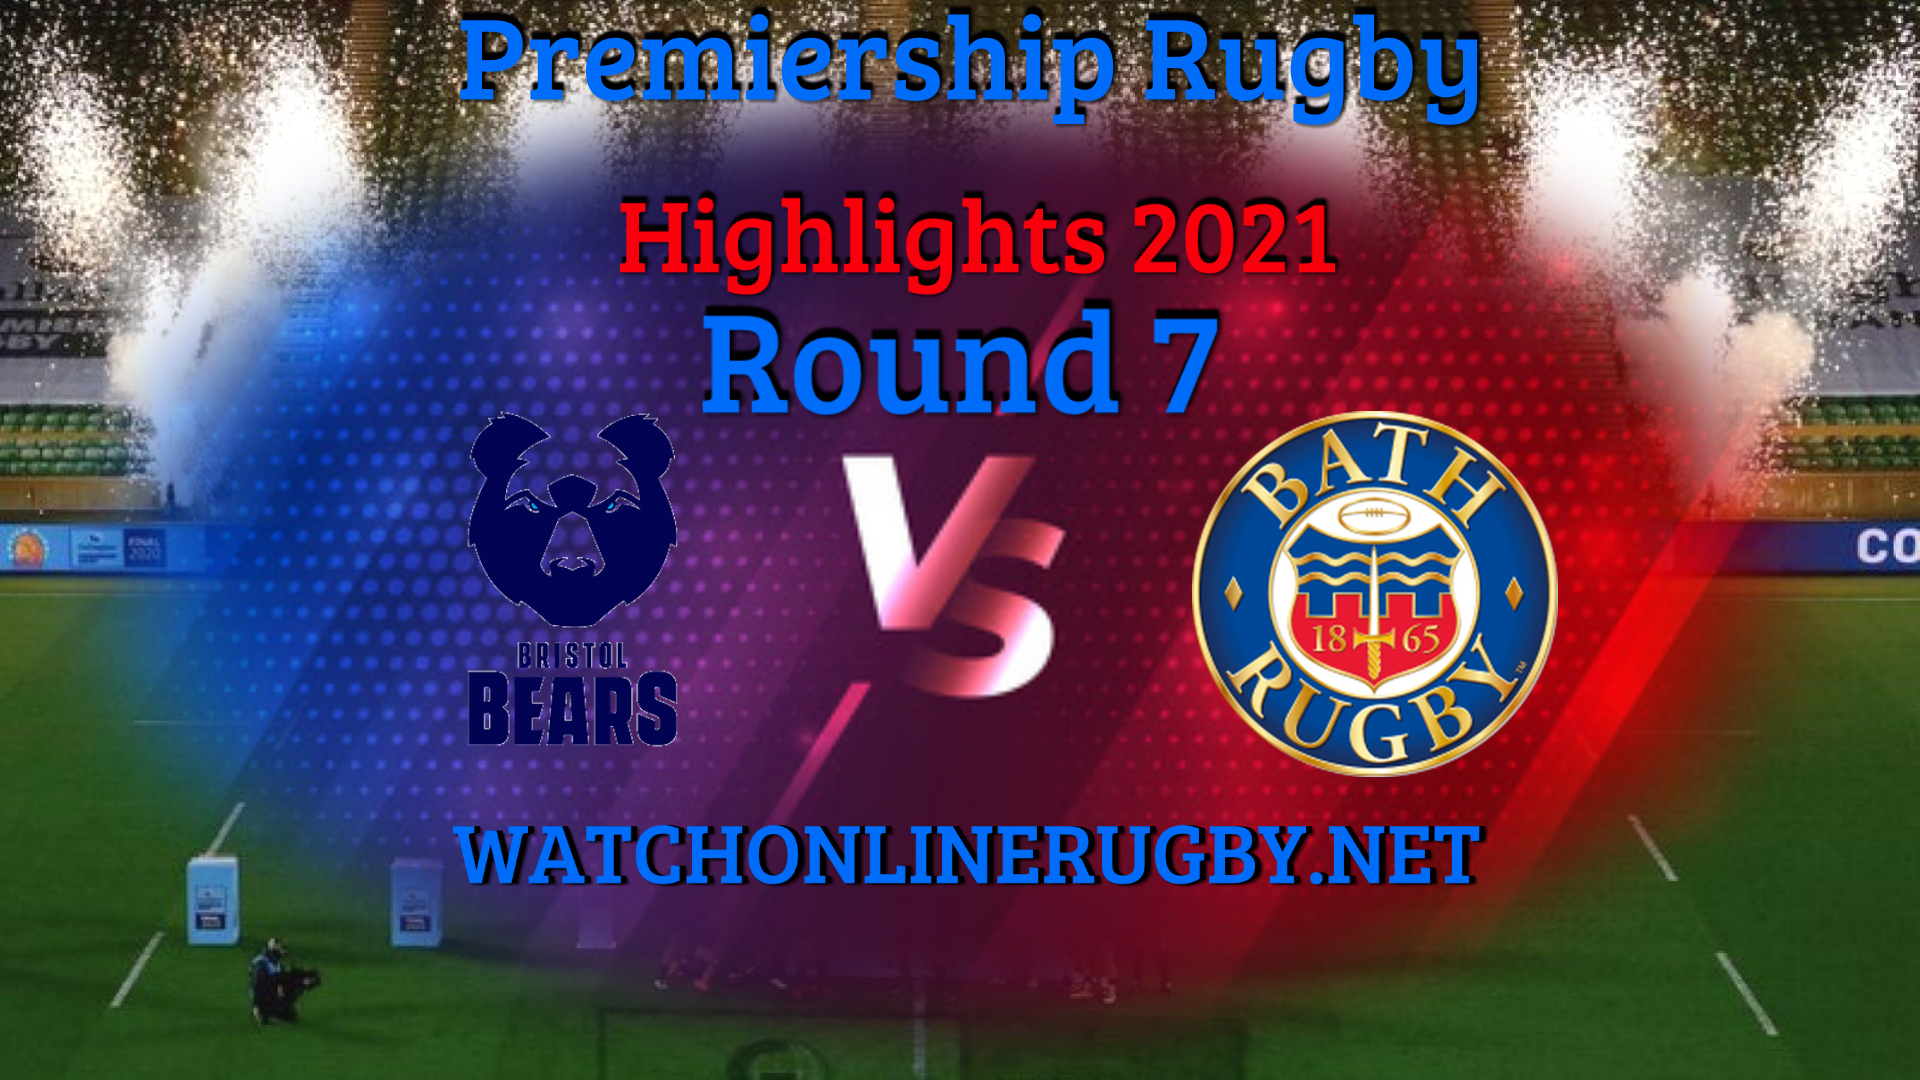 Bristol Bears VS Bath Rugby Premiership Rugby 2021 RD 7